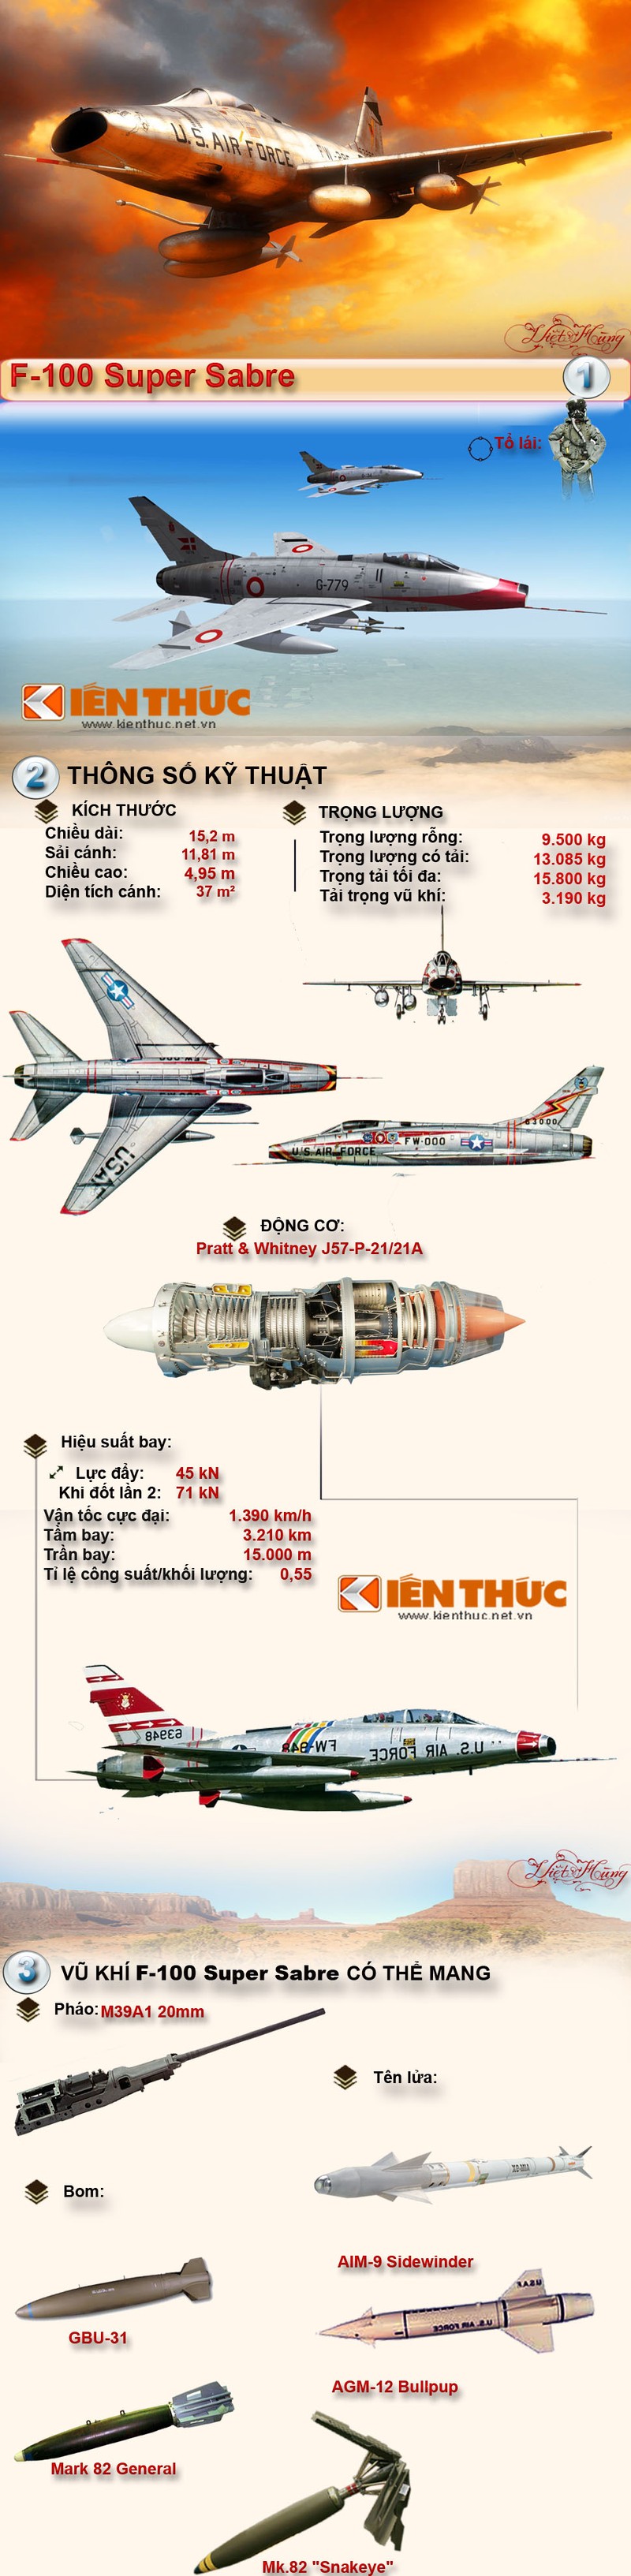 Infographic: Dong chien dau co the ky bai tran o Viet Nam (1)